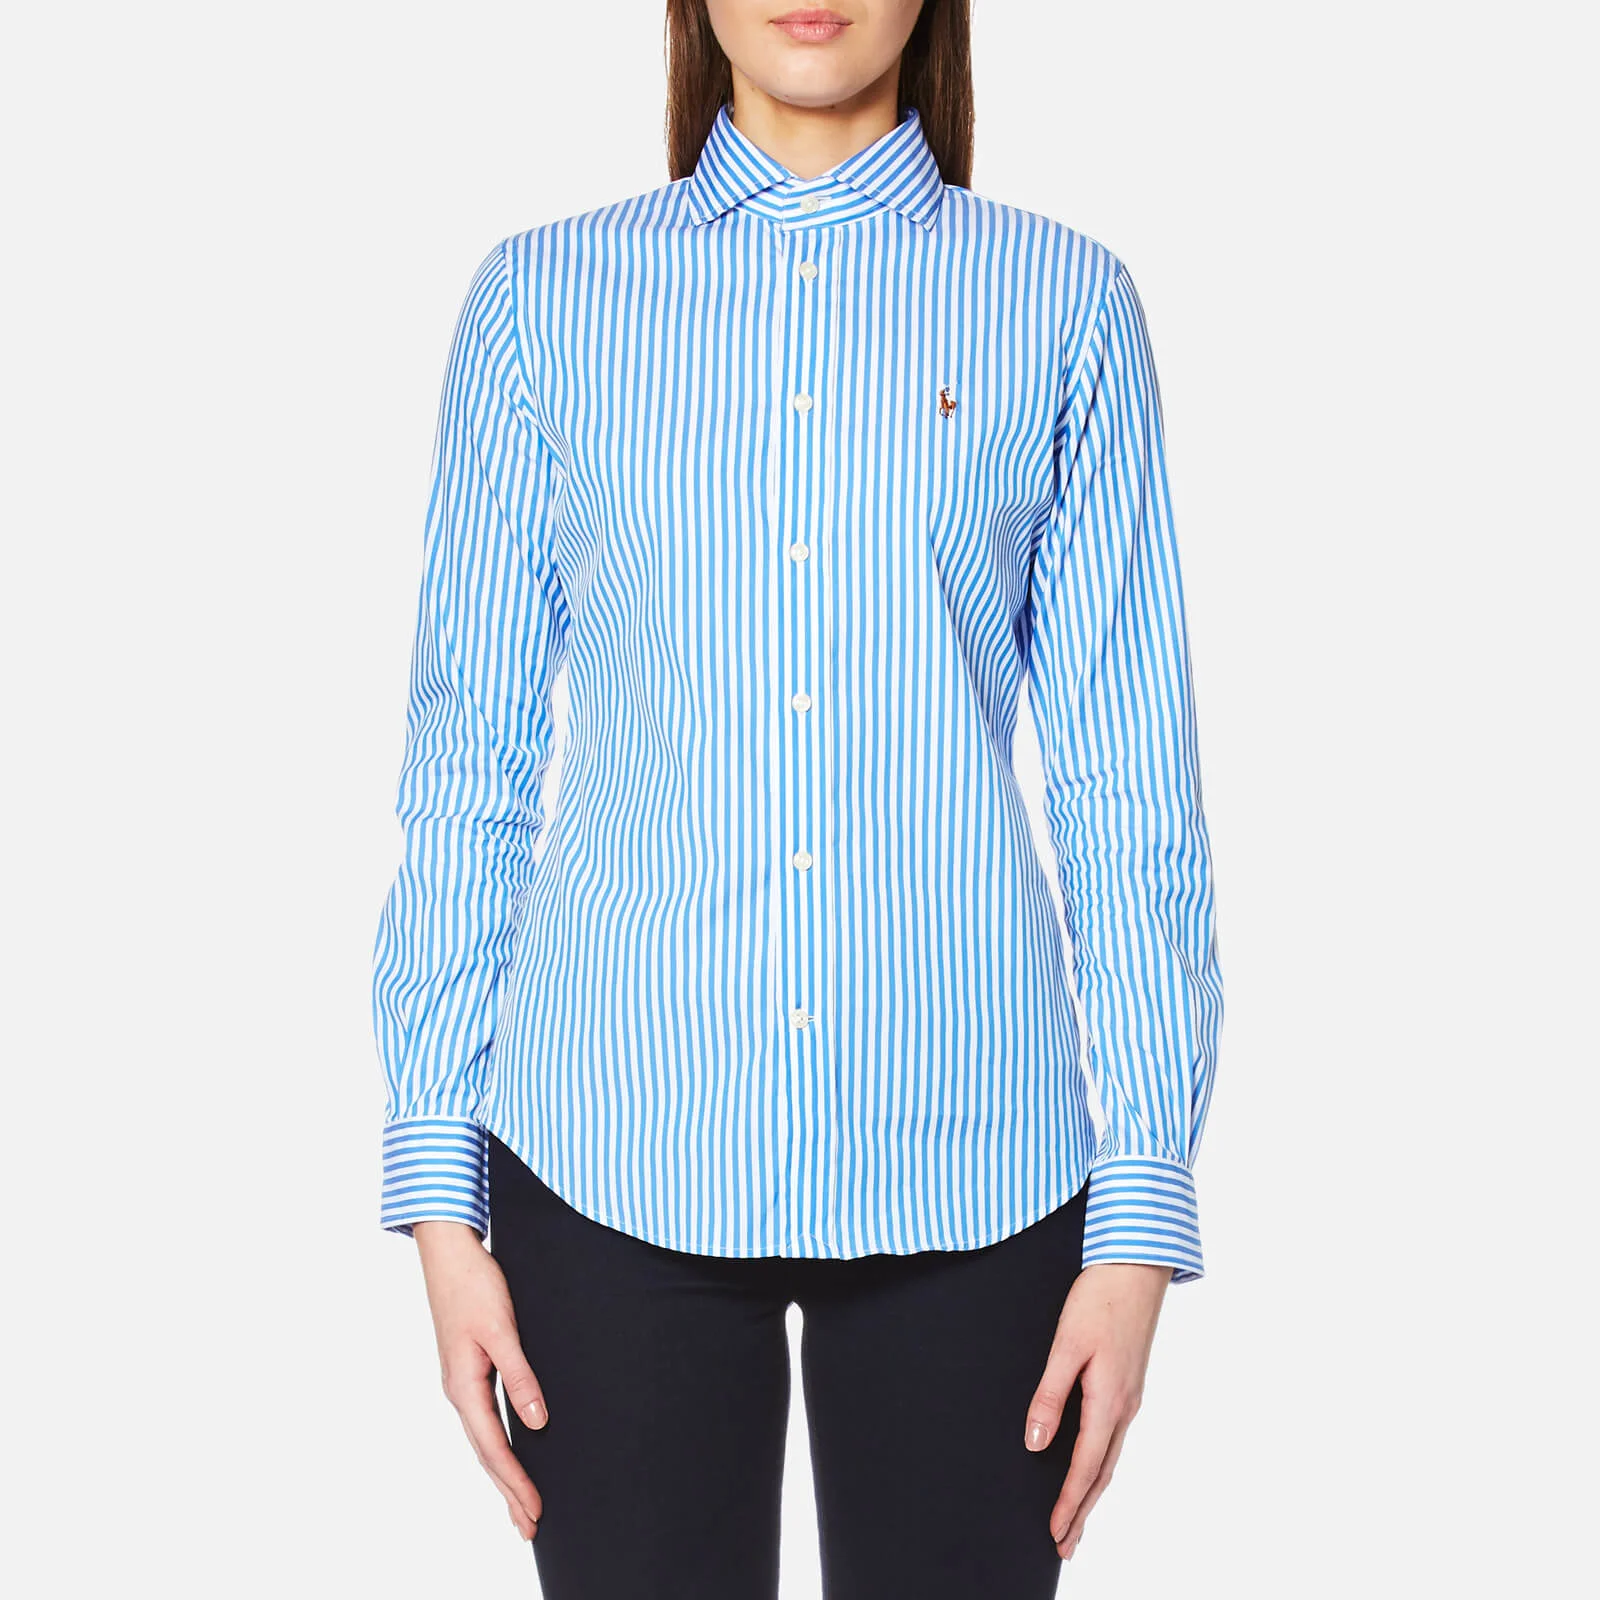 Polo Ralph Lauren Women's Kendal Stripe Shirt - Blue/White Image 1